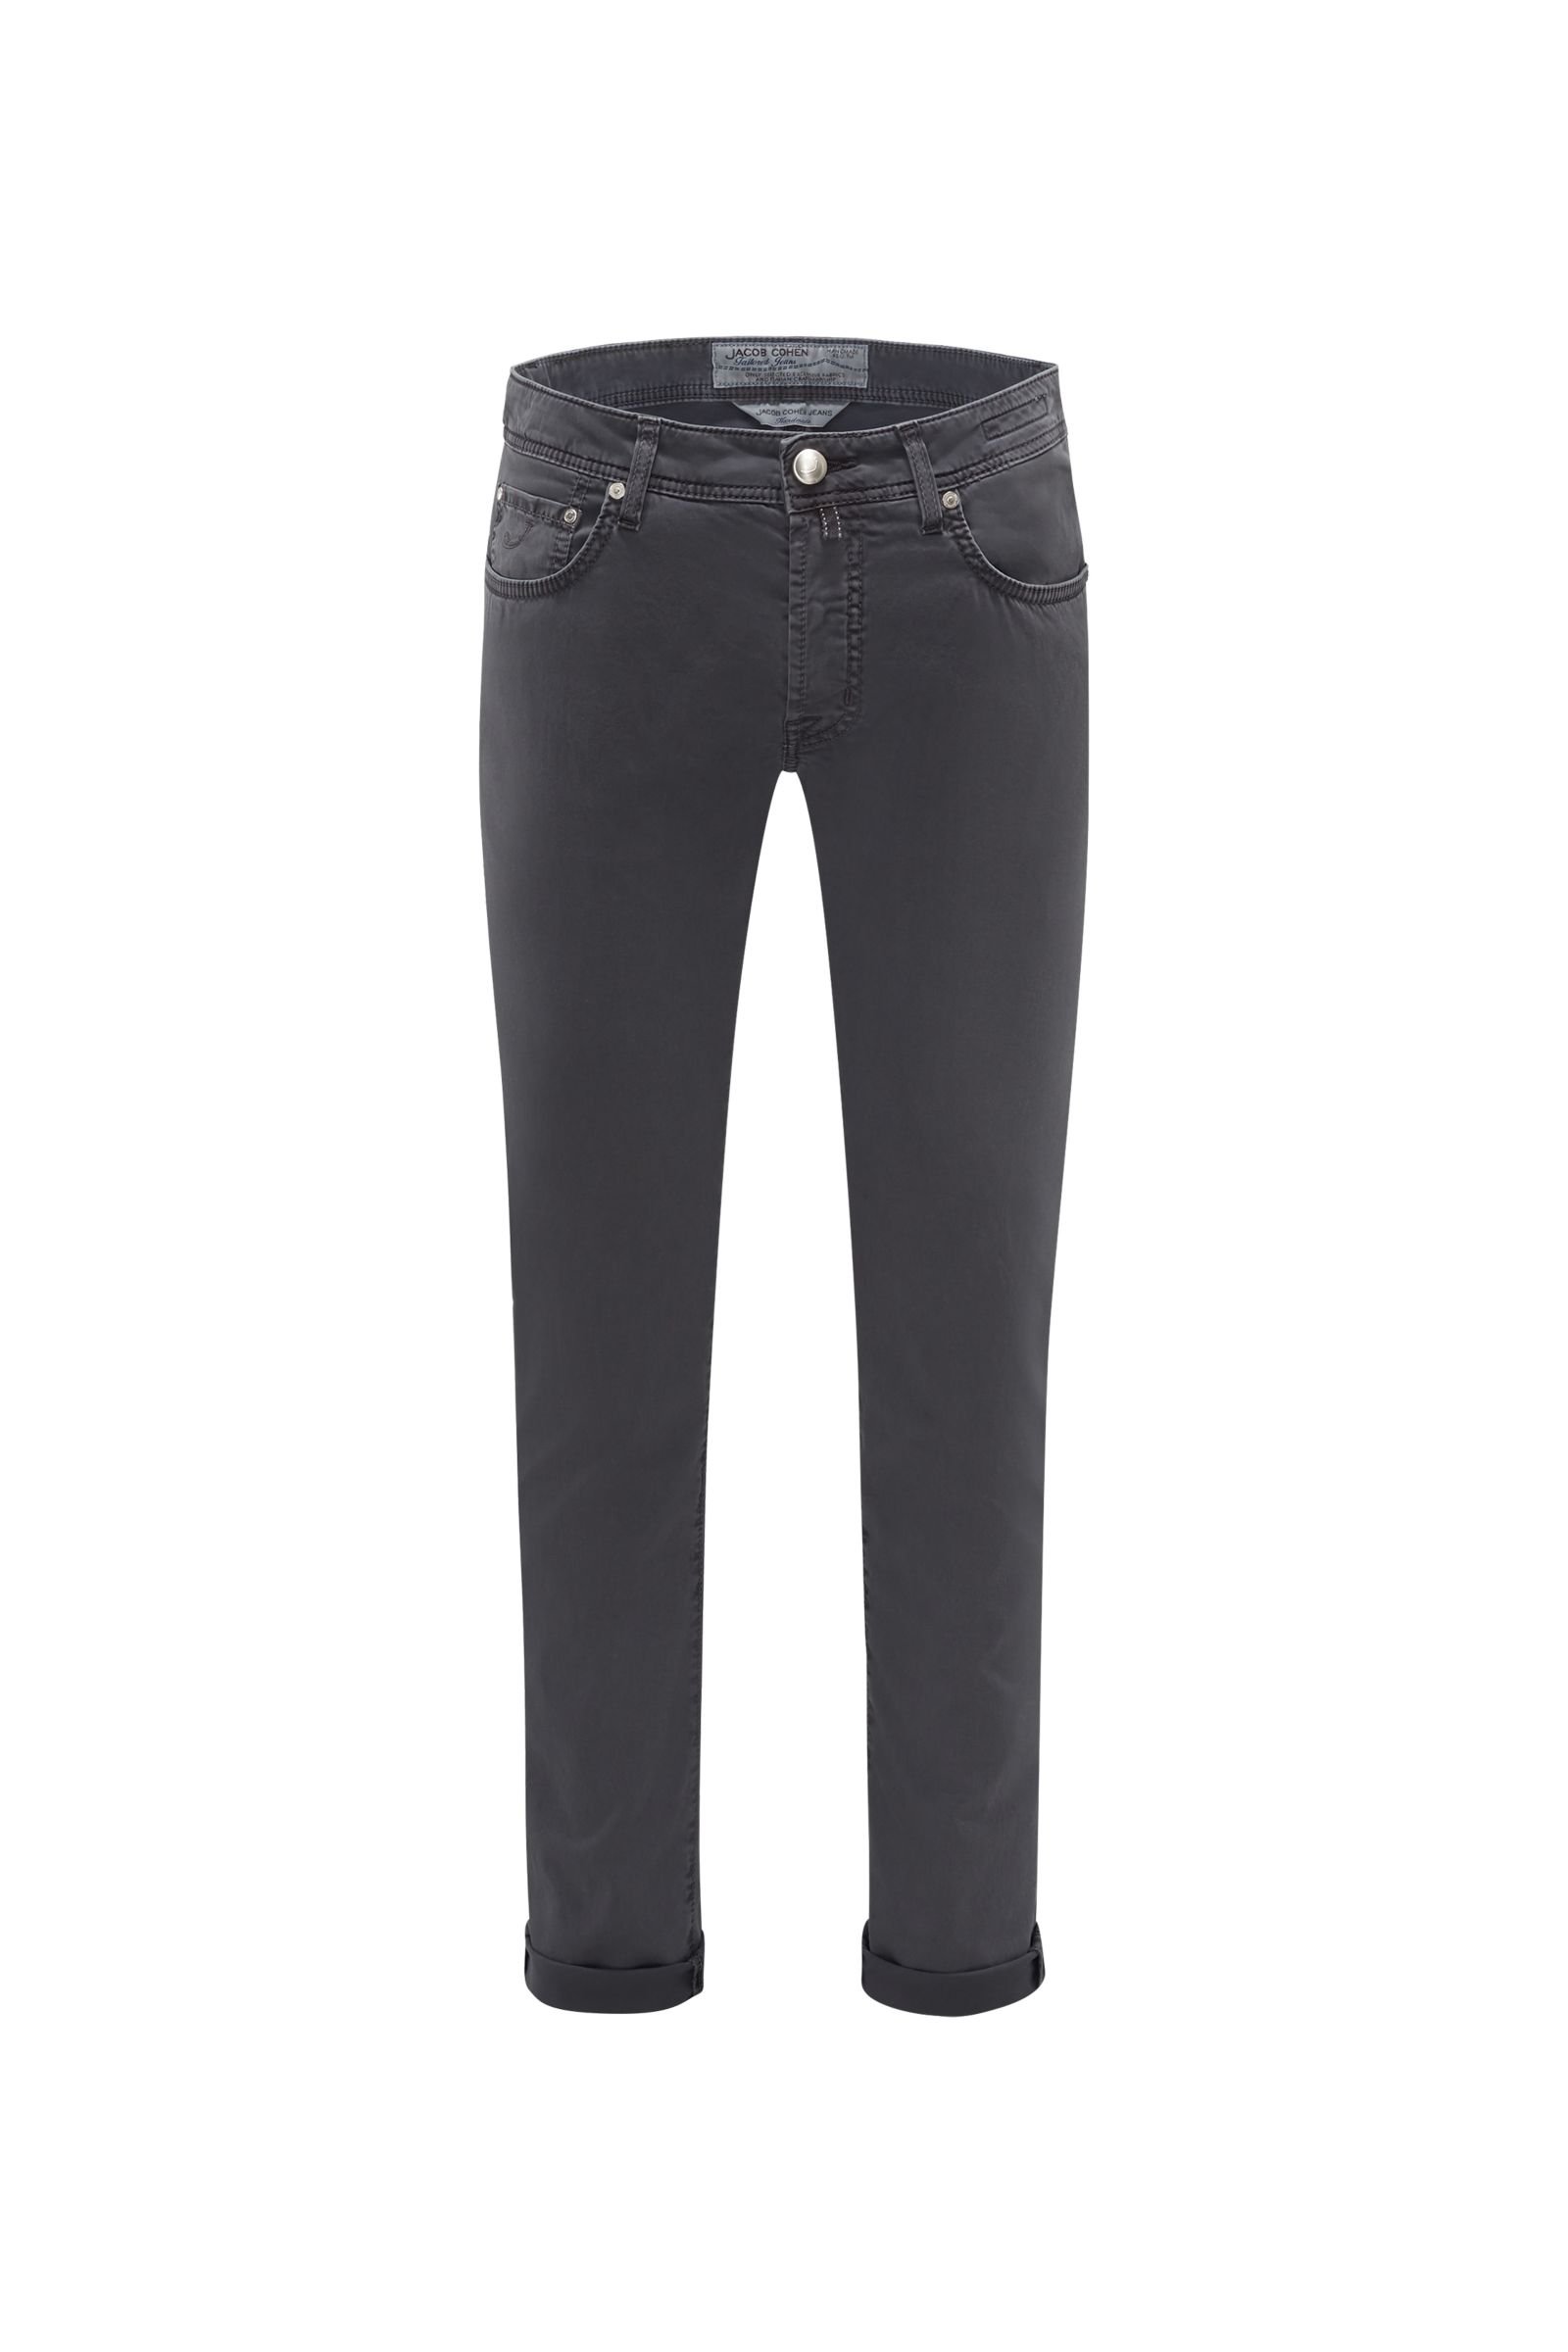 Cotton trousers 'PW688 Comfort' dark grey